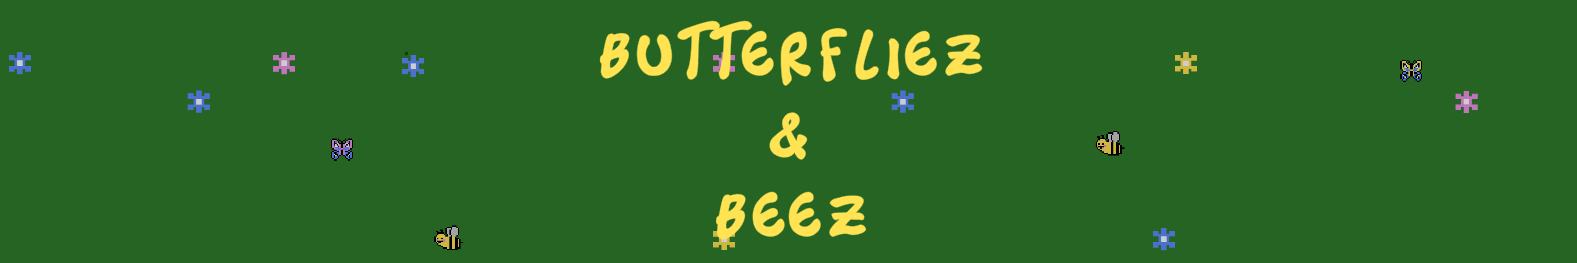 Butterfliez & Beez